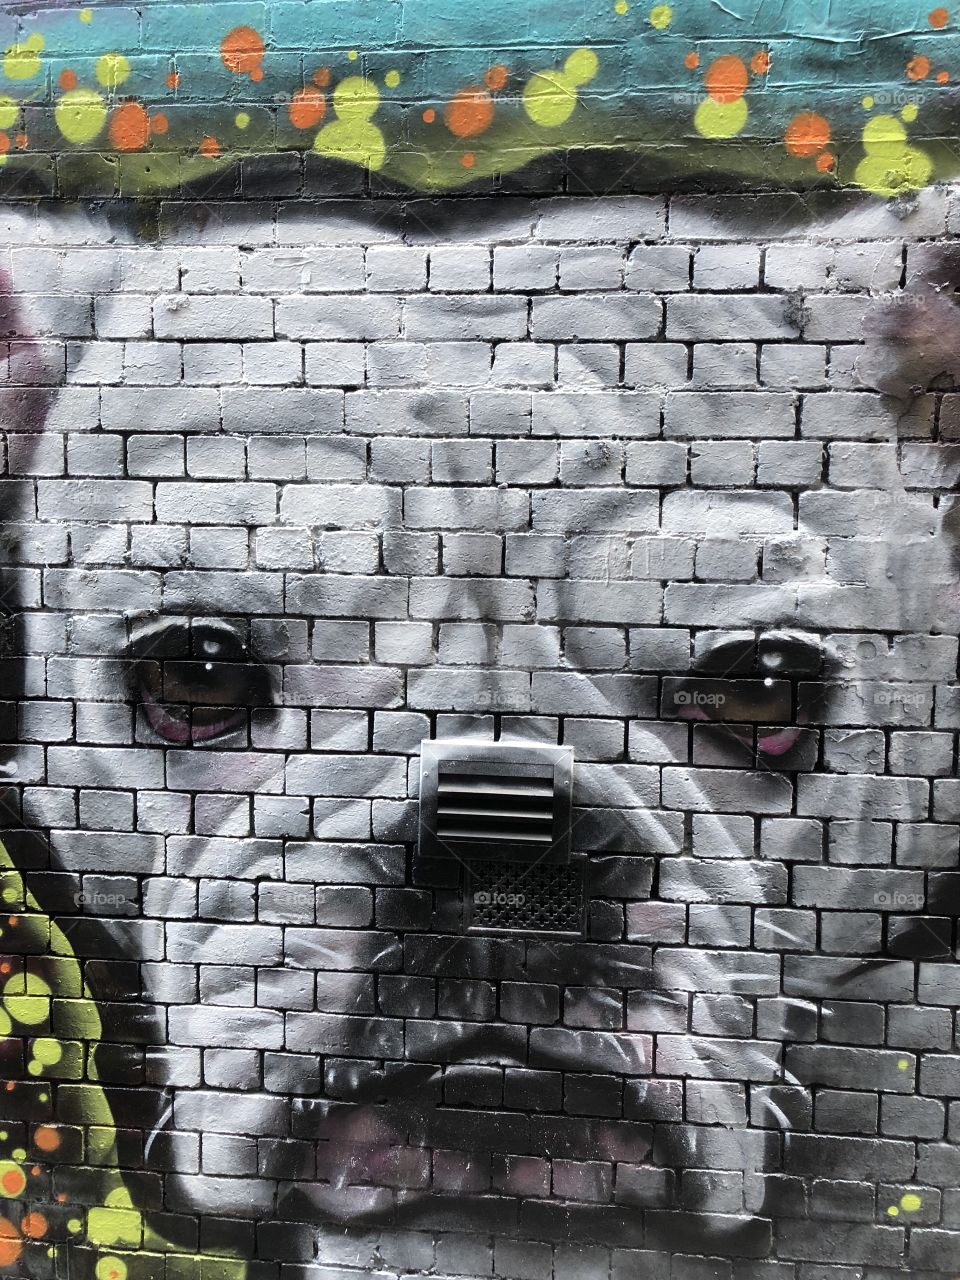 Graffiti art dog 